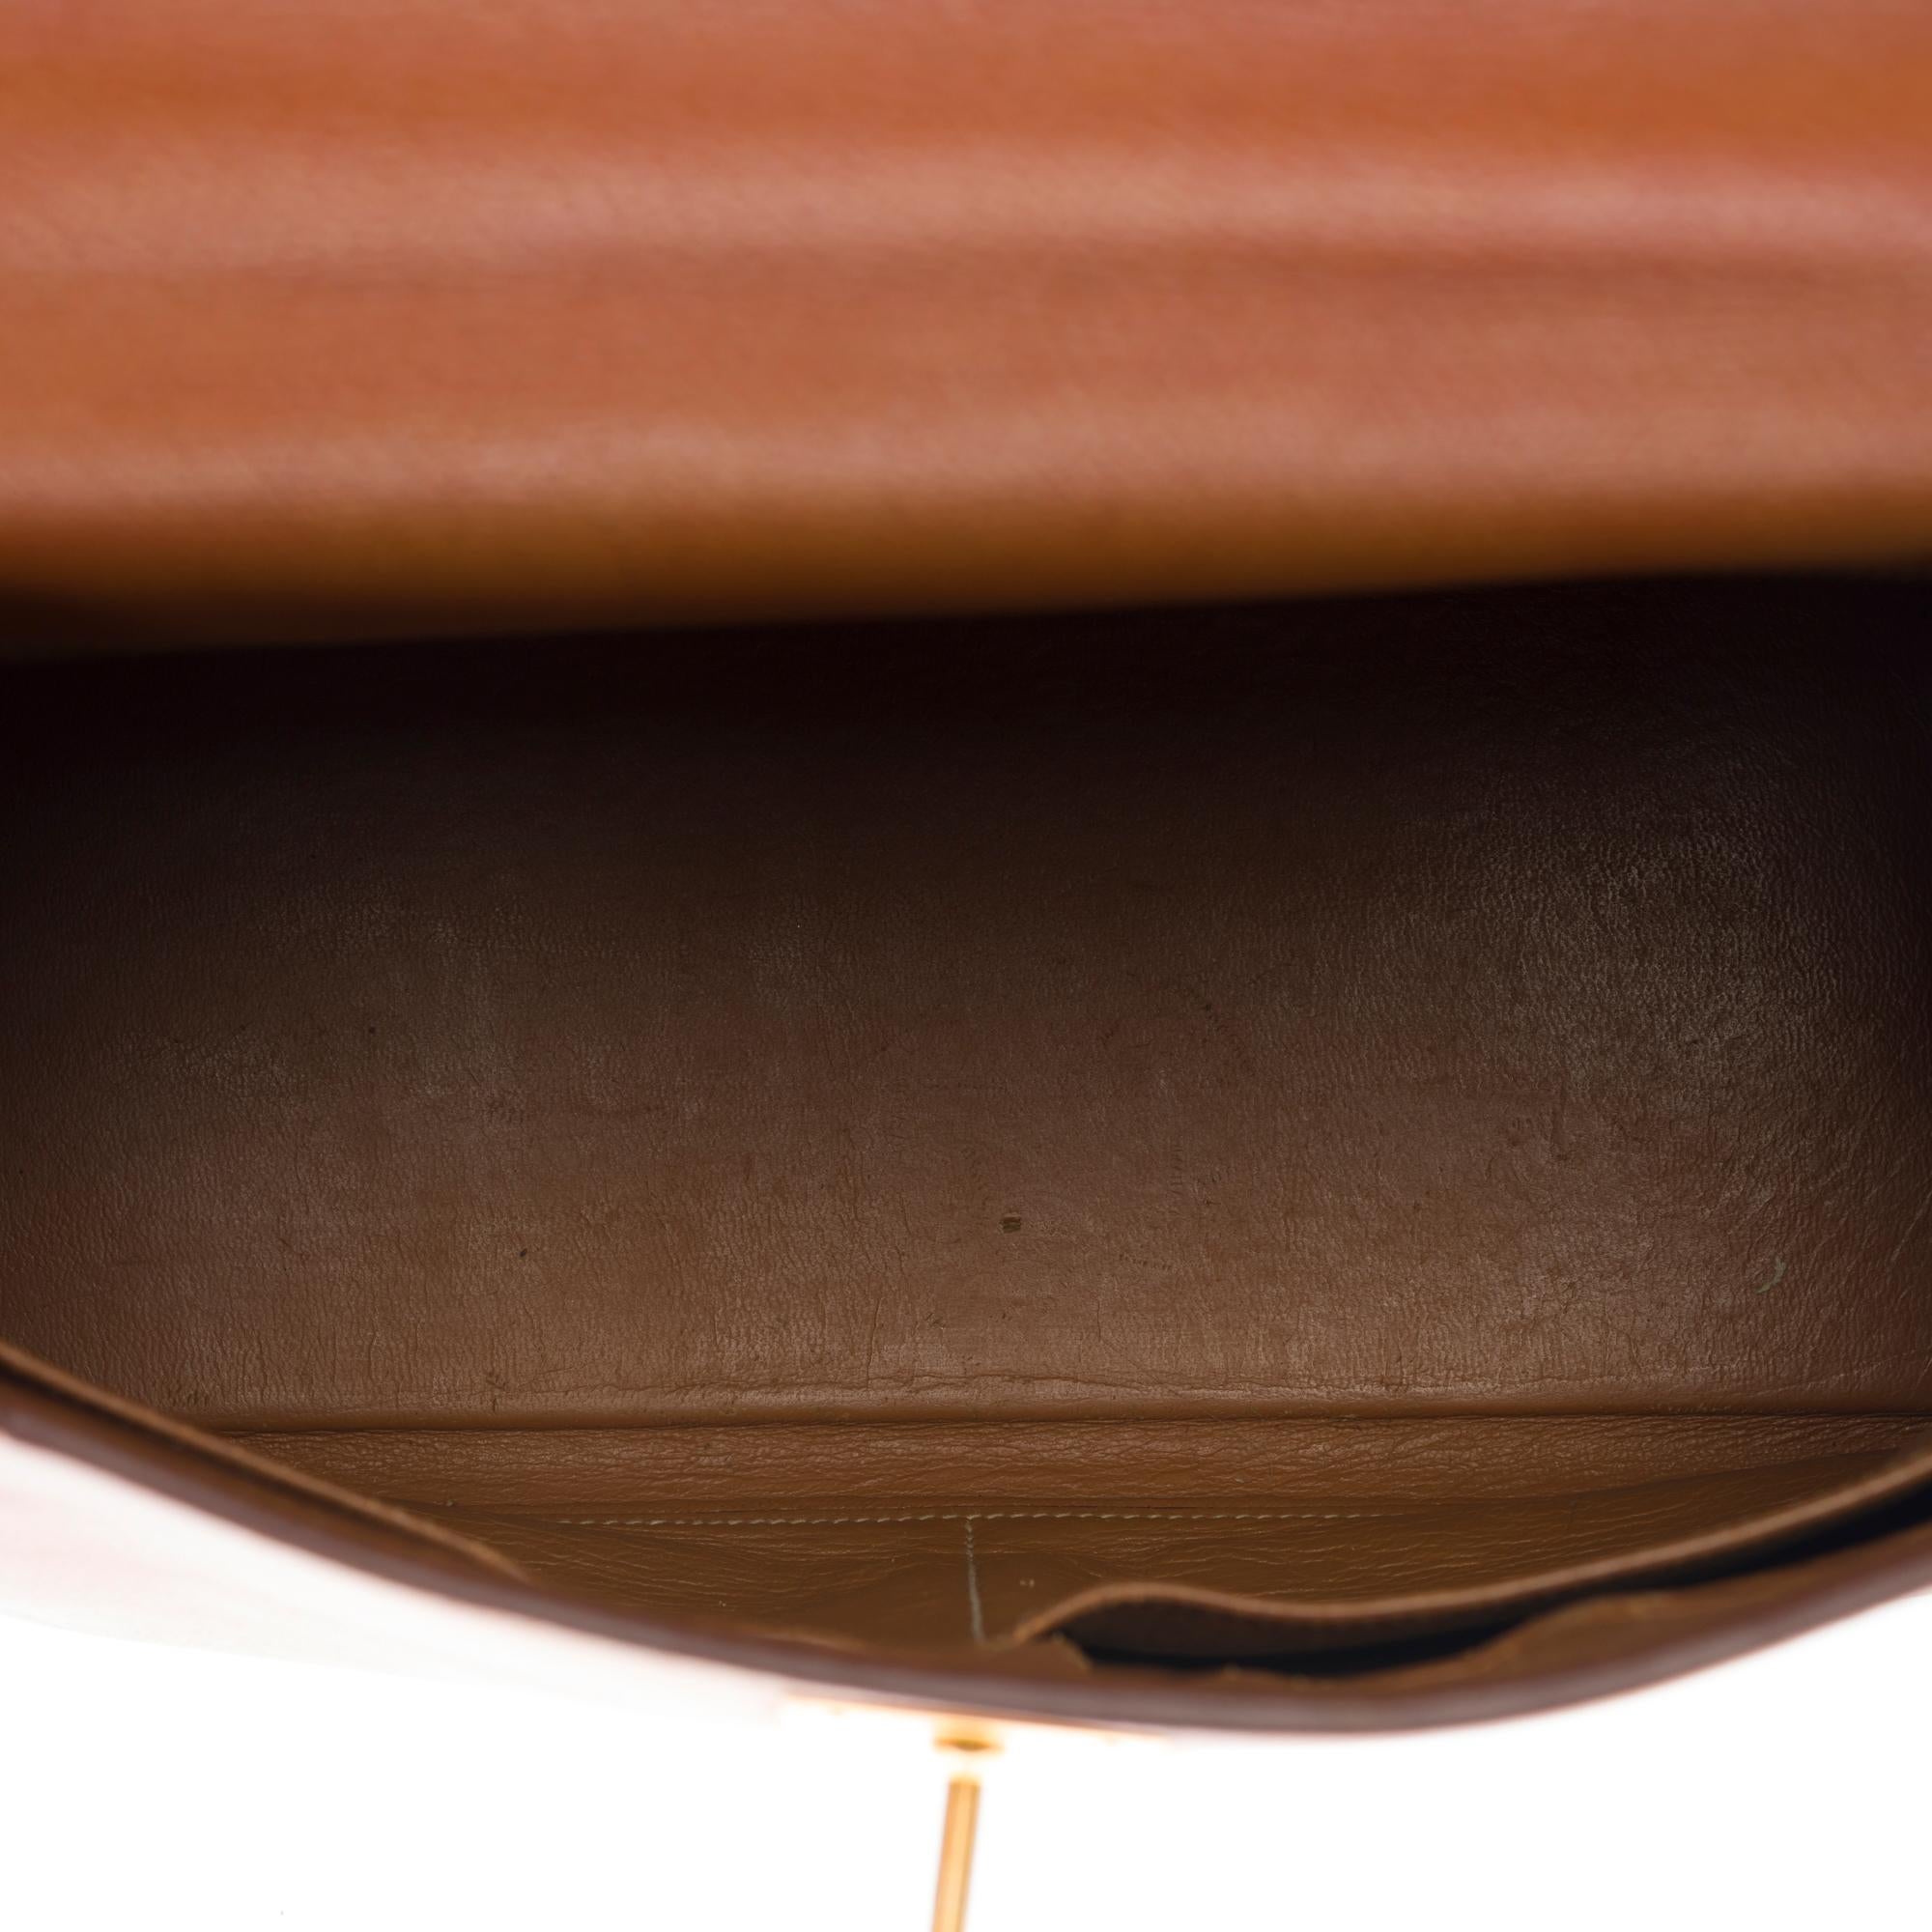 Hermès Kelly 28cm retourné handbag with strap in Gold Courchevel leather, GHW 2